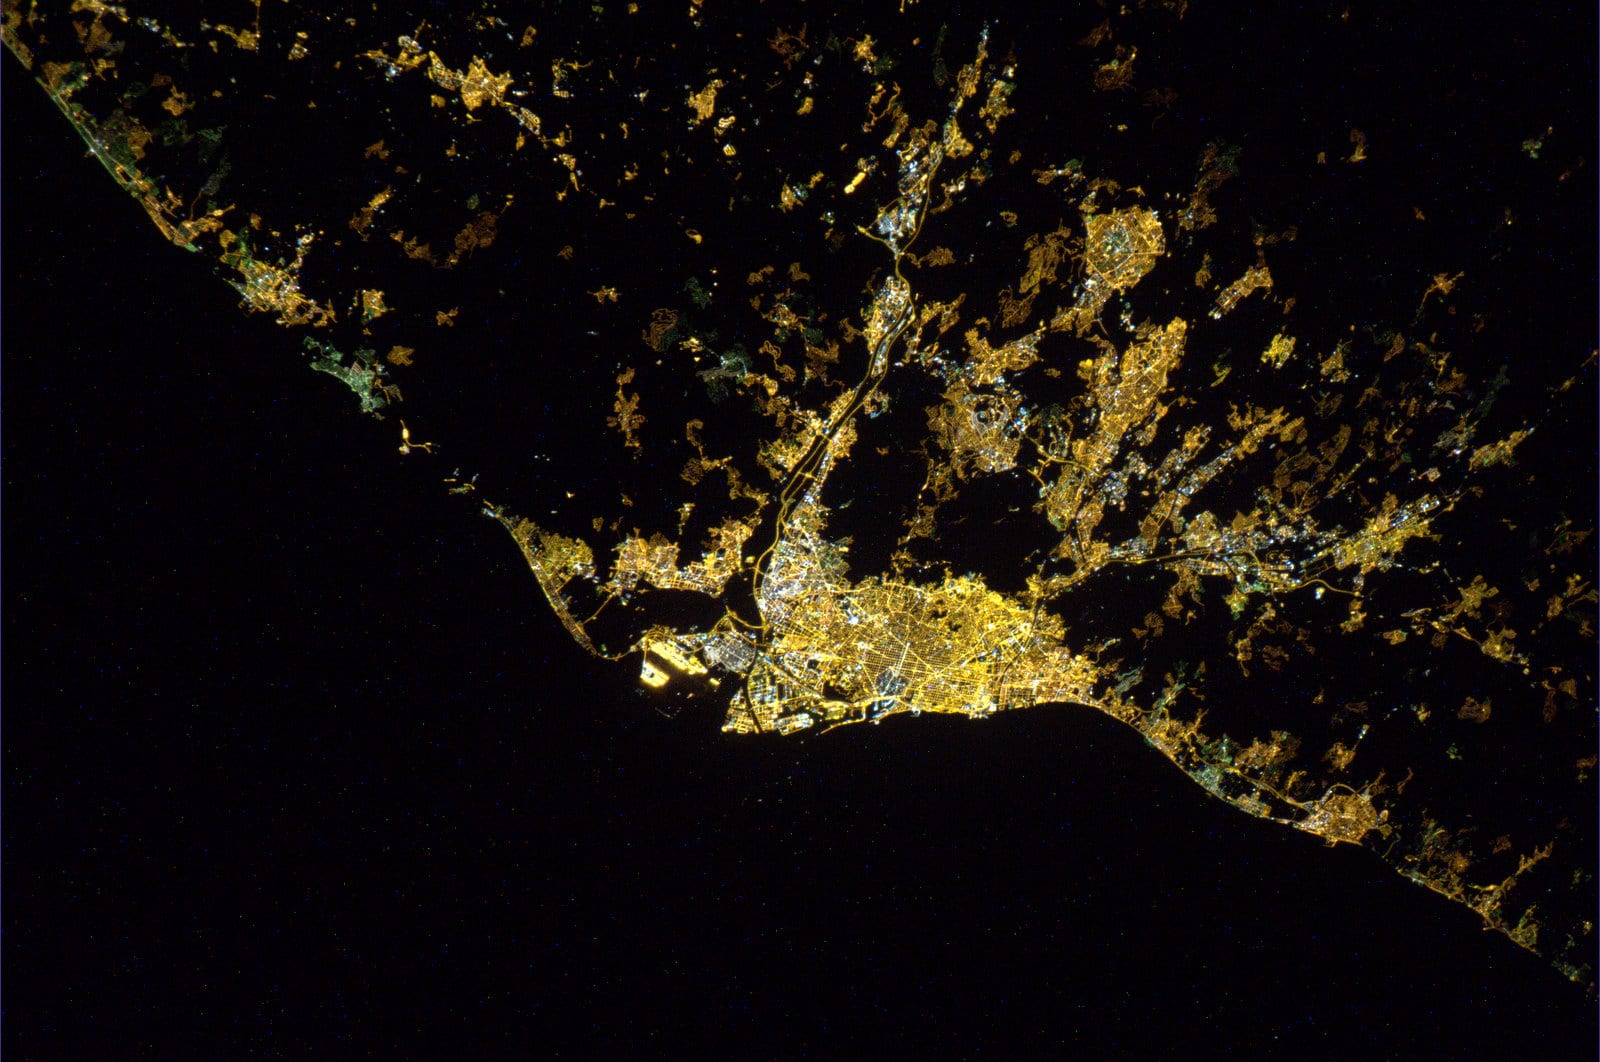 Barcelona, de noche desde la ISS. Foto: Paolo Nespoli/ESA-NASA.